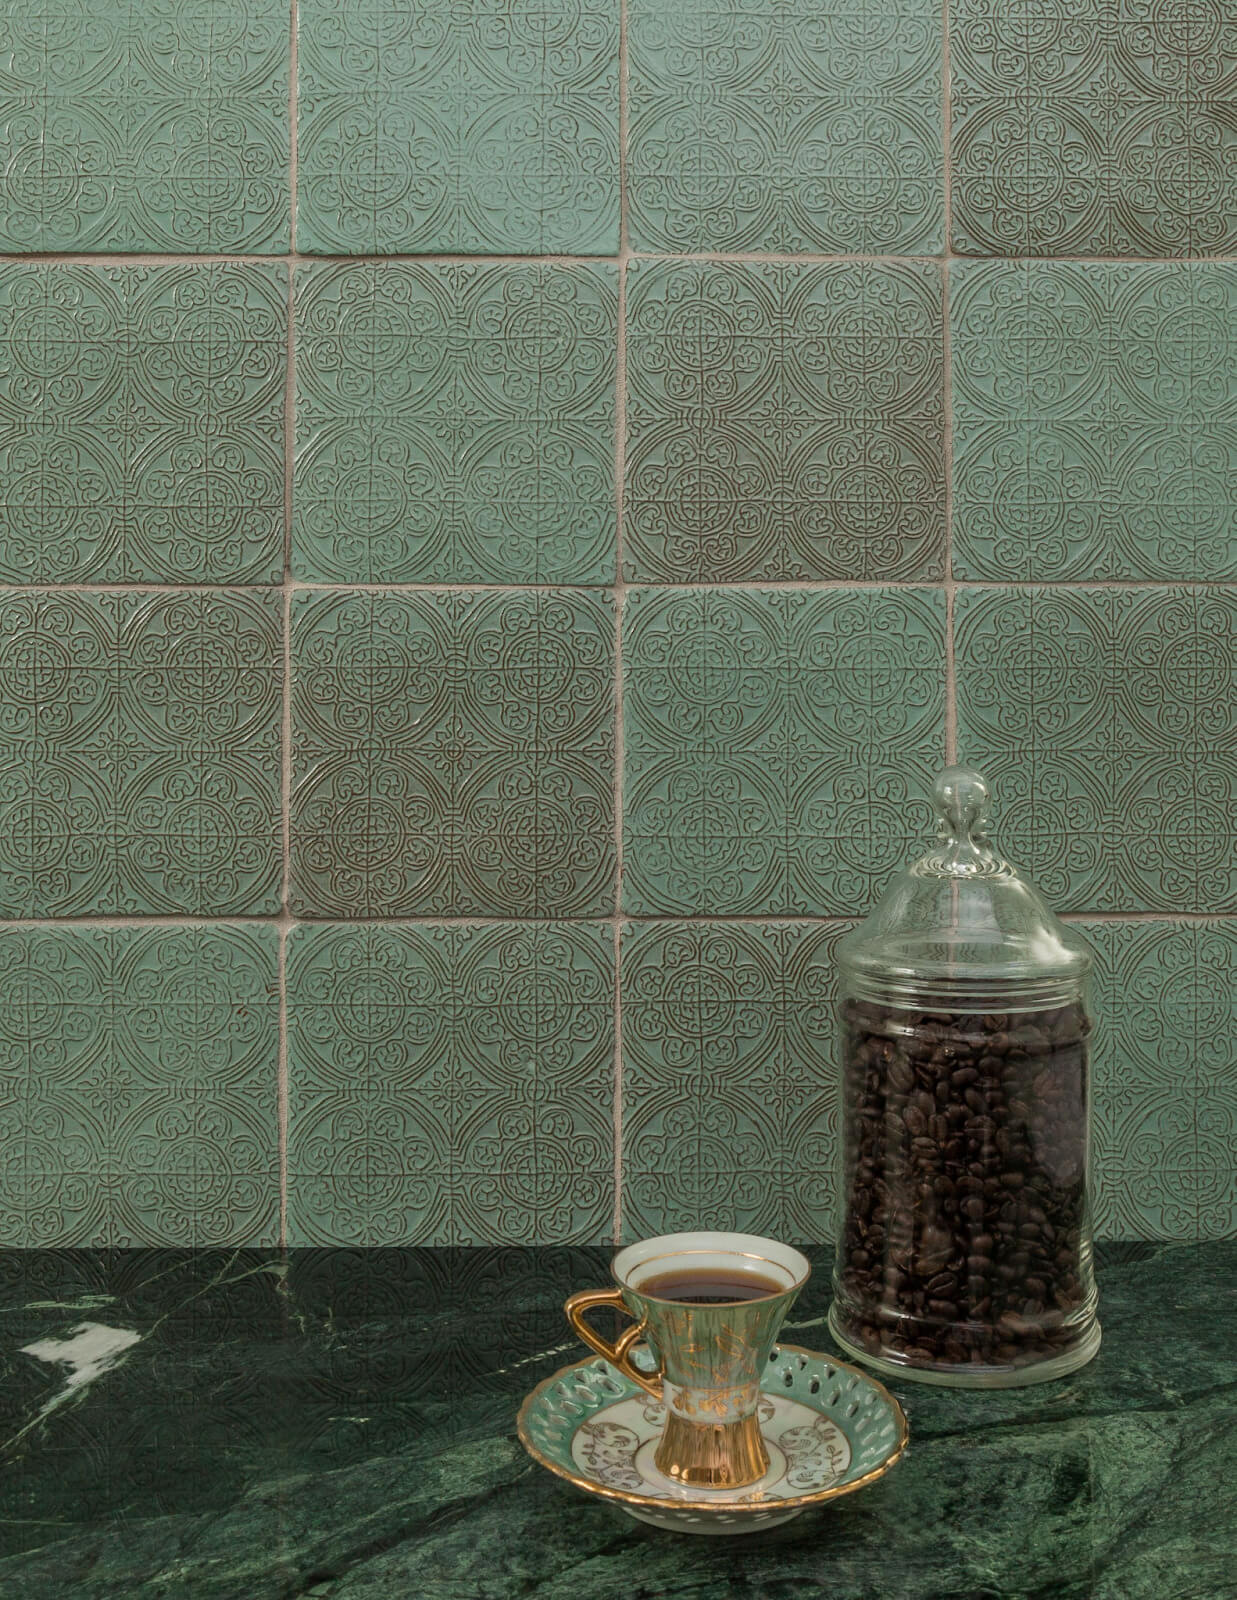 Textured backsplash tile with a delicate pattern